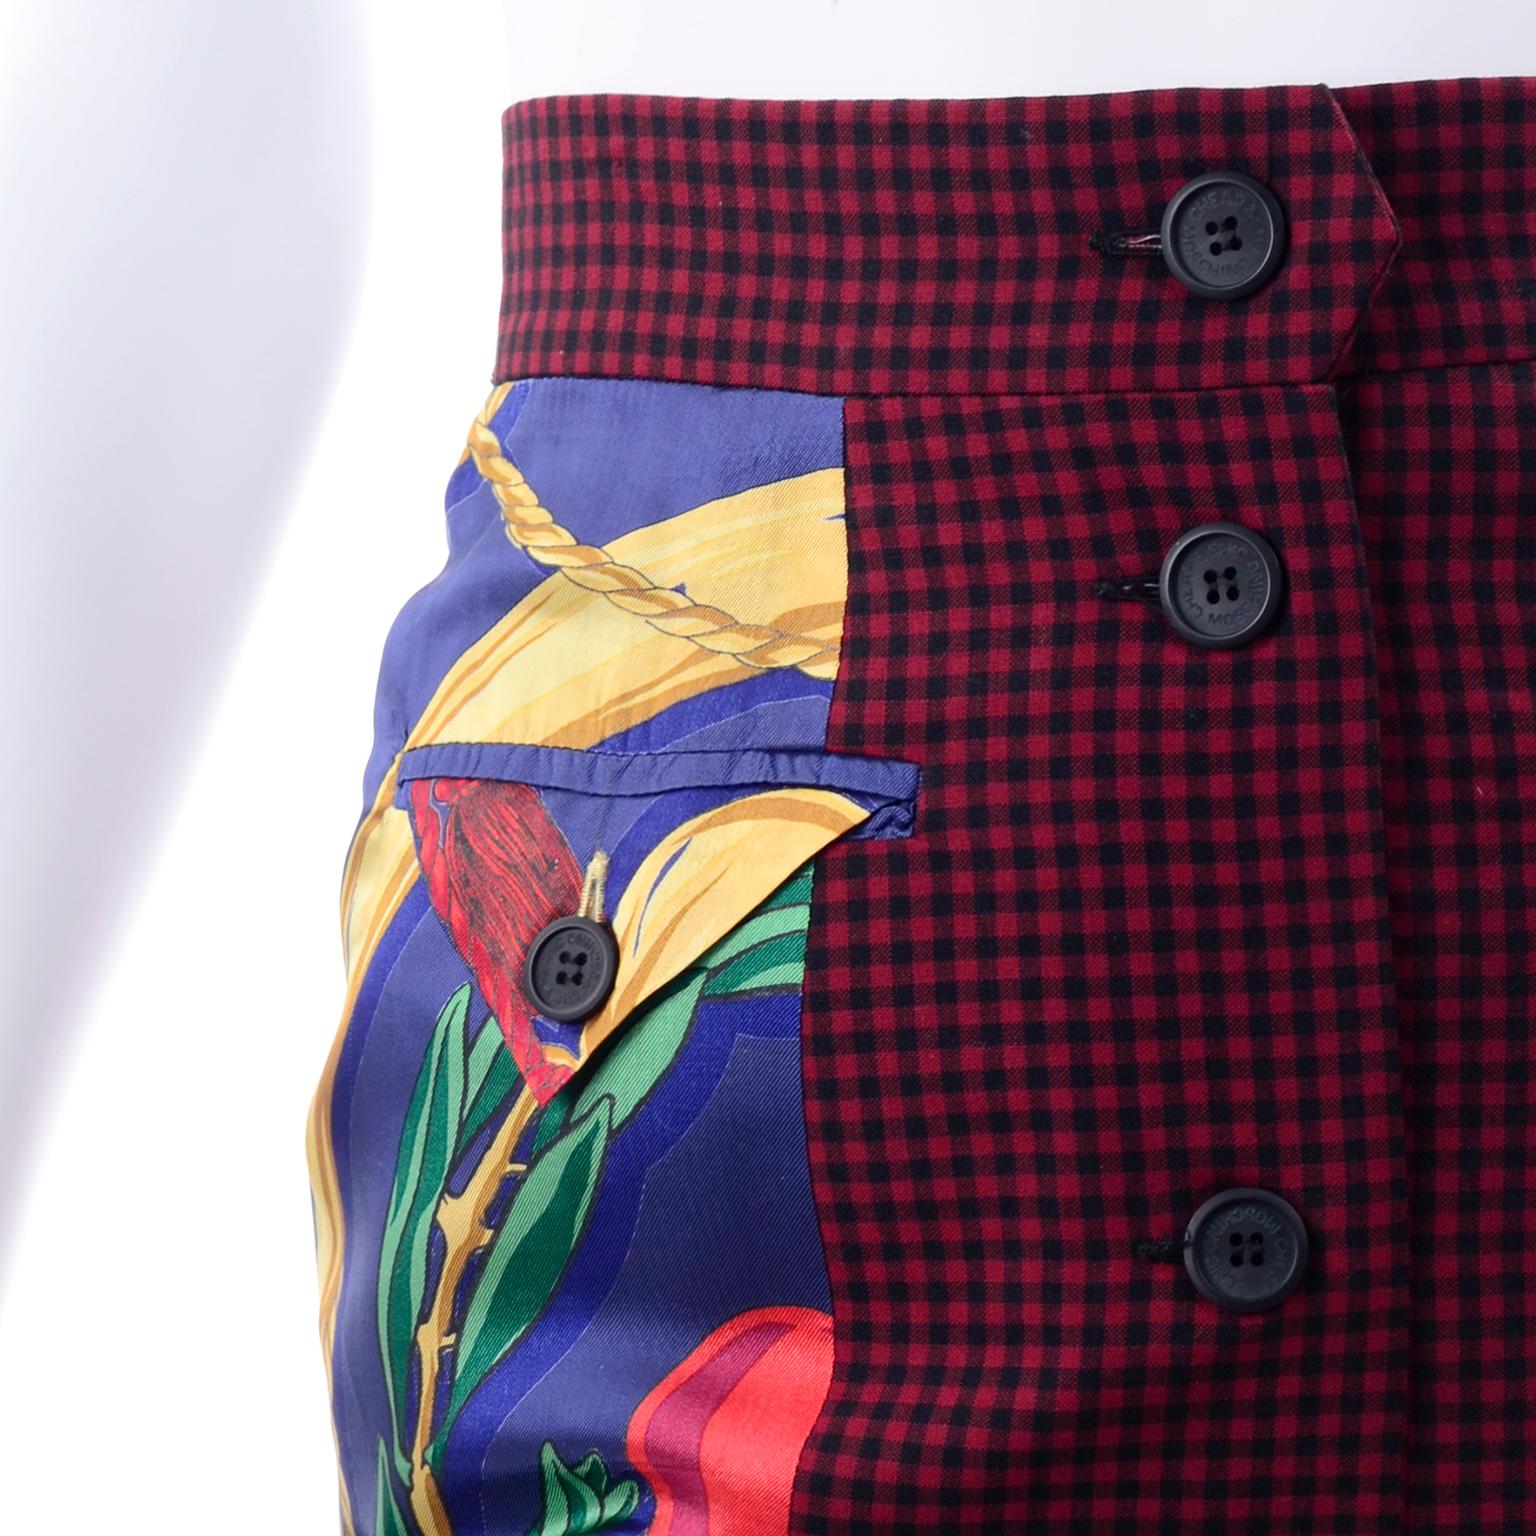 Vintage Franco Moschino Pret a Porter Nautical Print Skirt w/ Fans & Vines 3